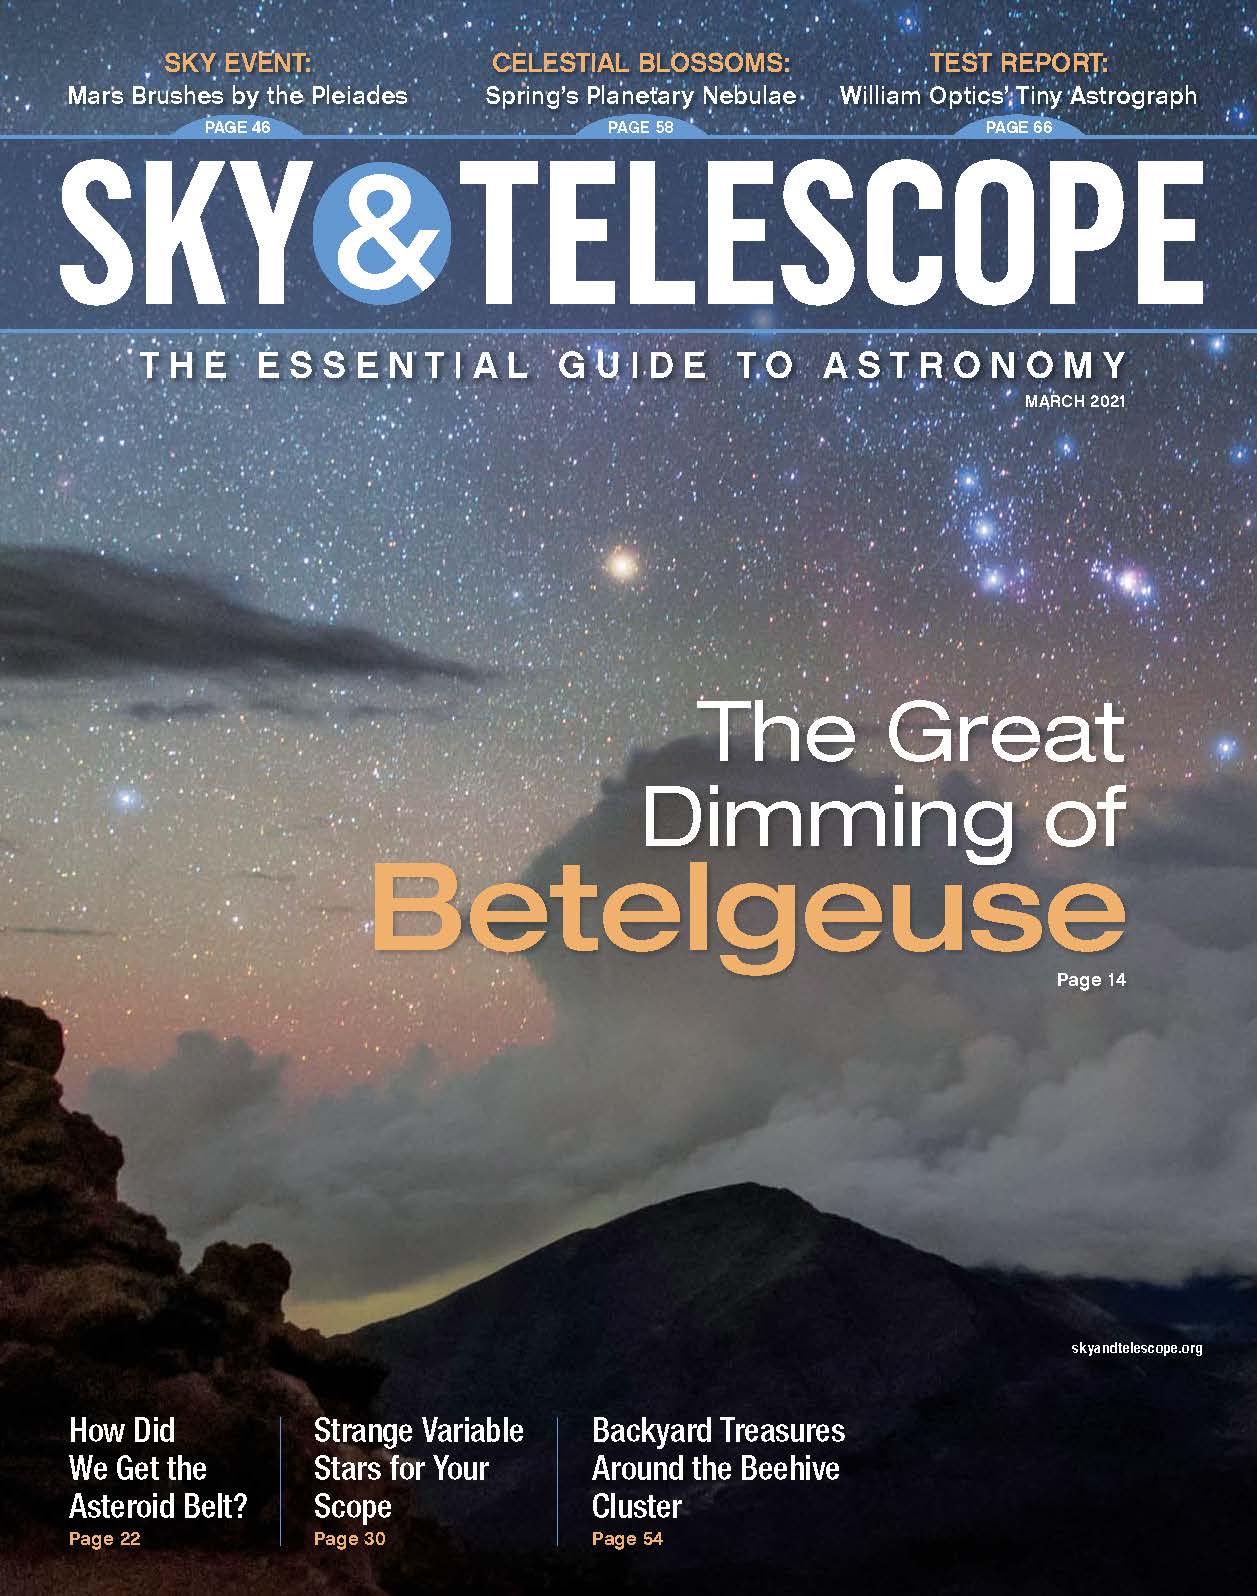 Sky & Telescope December 2020 Issue